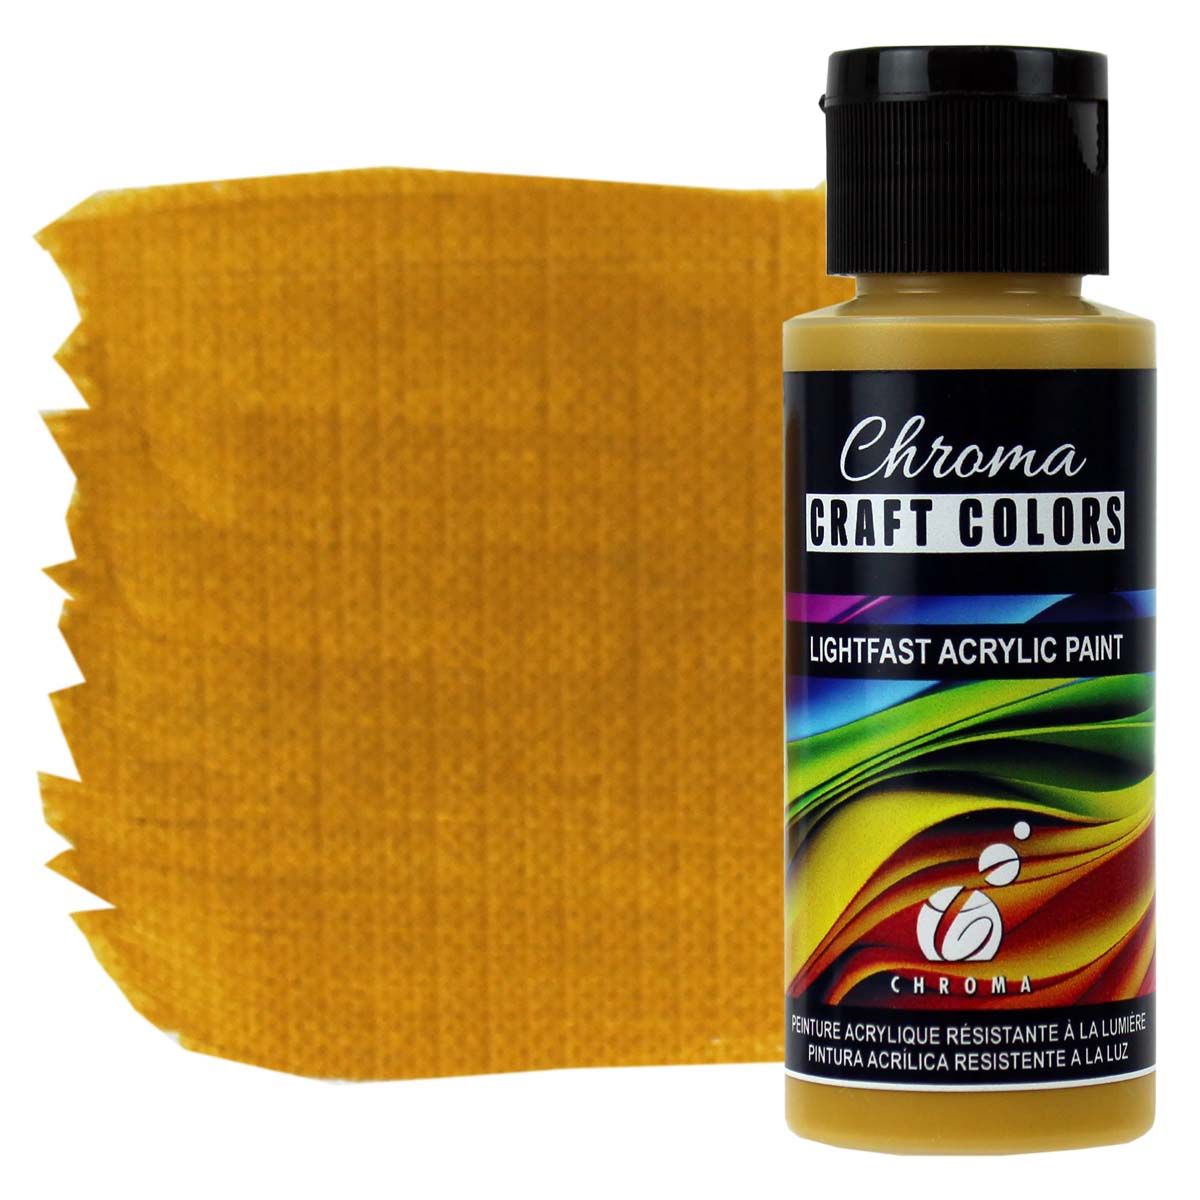 Chroma Acrylic Craft Paint - Spicy Mustard, 2oz Bottle